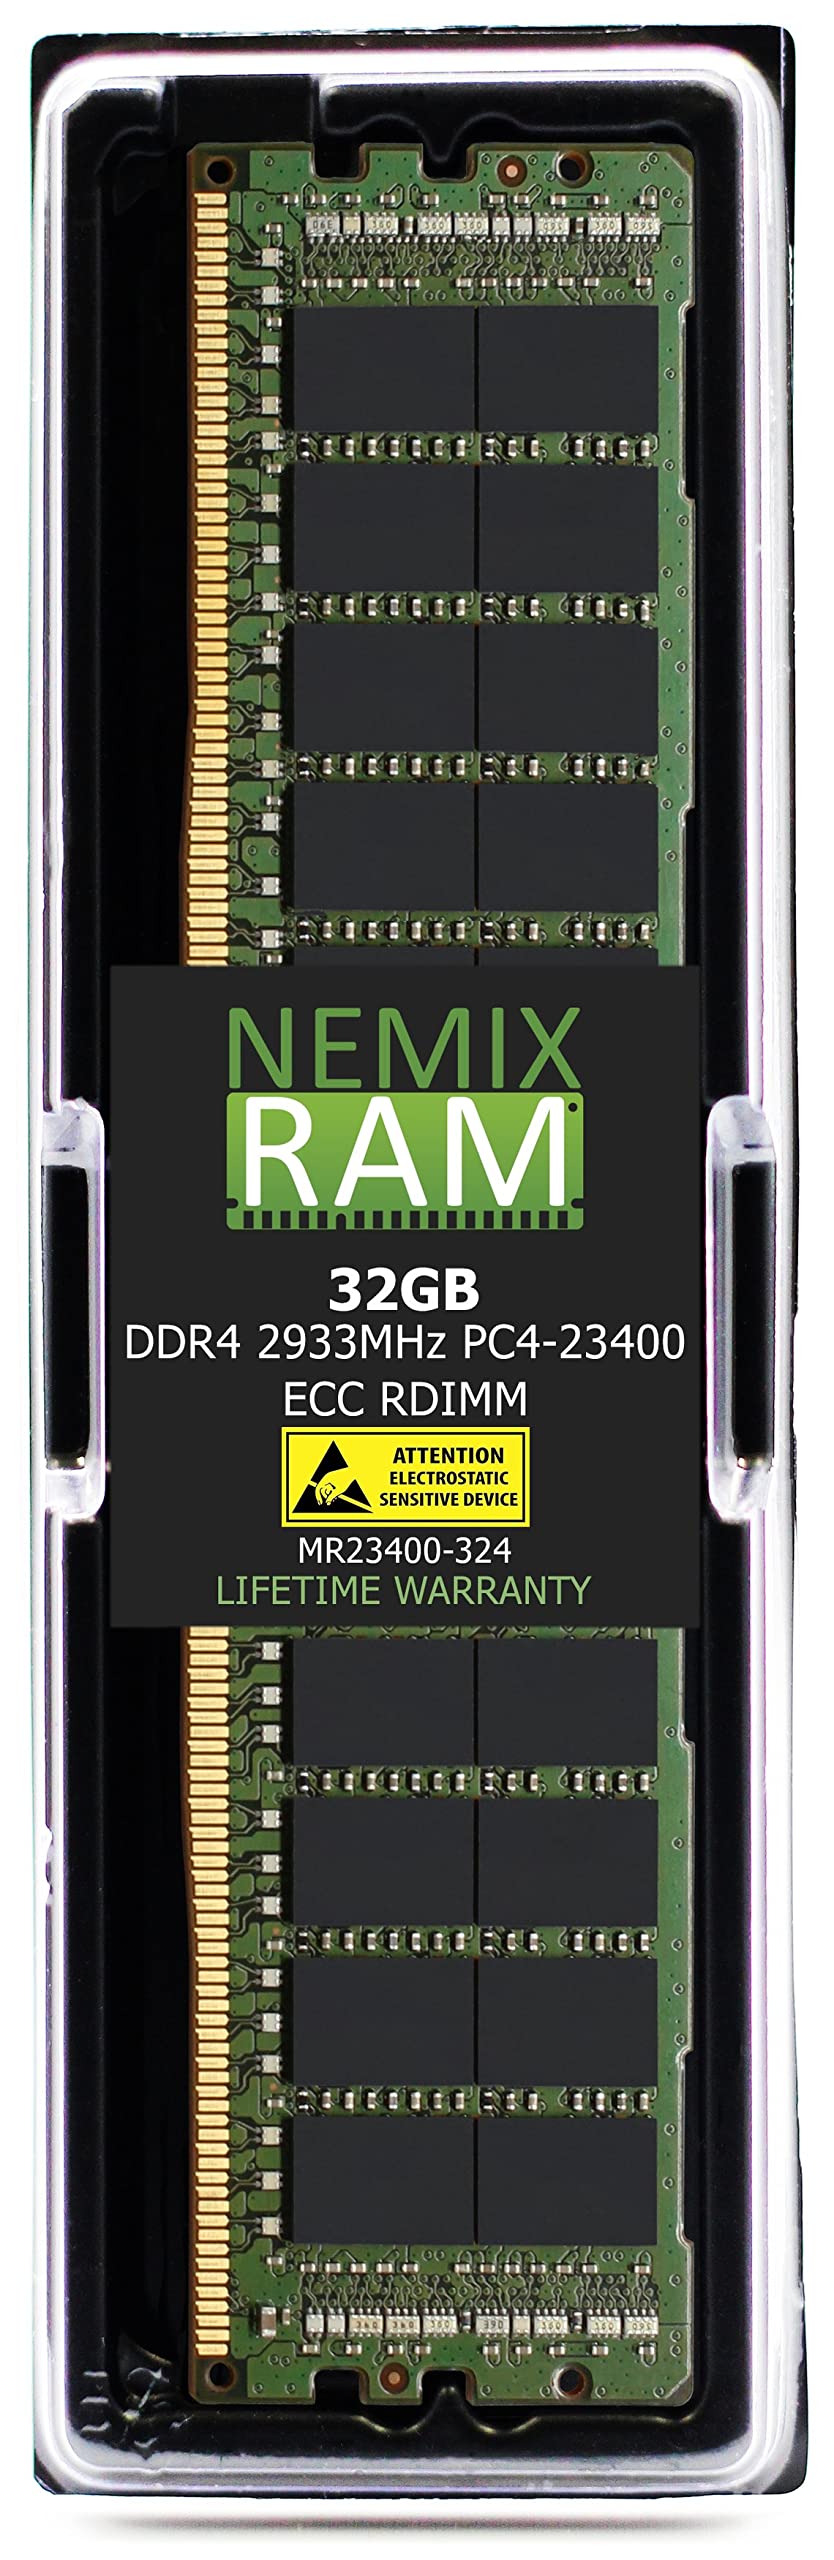 NEMIX RAM 32GB DDR4-2933 PC4-23400 ECC RDIMM レジスタードサーバーメモリアップグレード Dell EMC PowerEdge